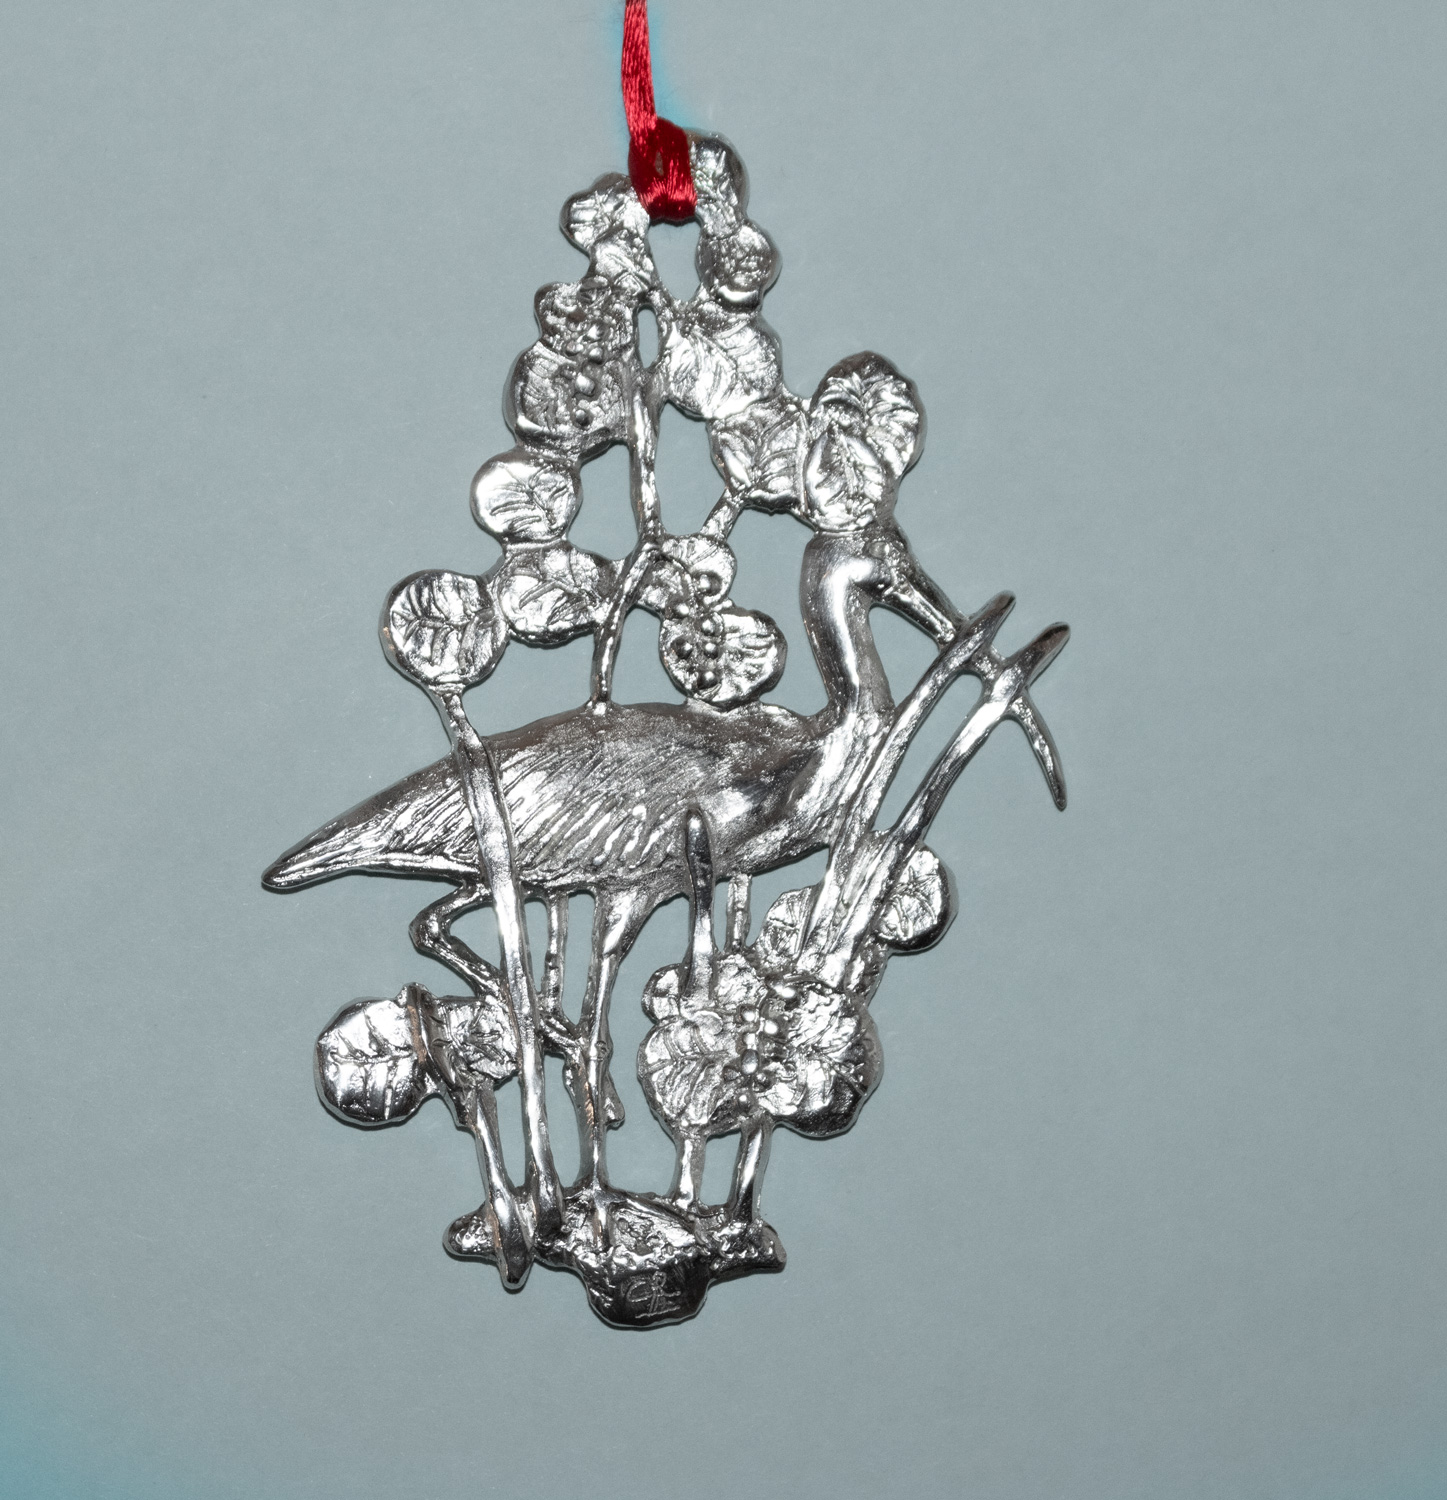 2019 Ibis Ornament by Charles H. Reinike III